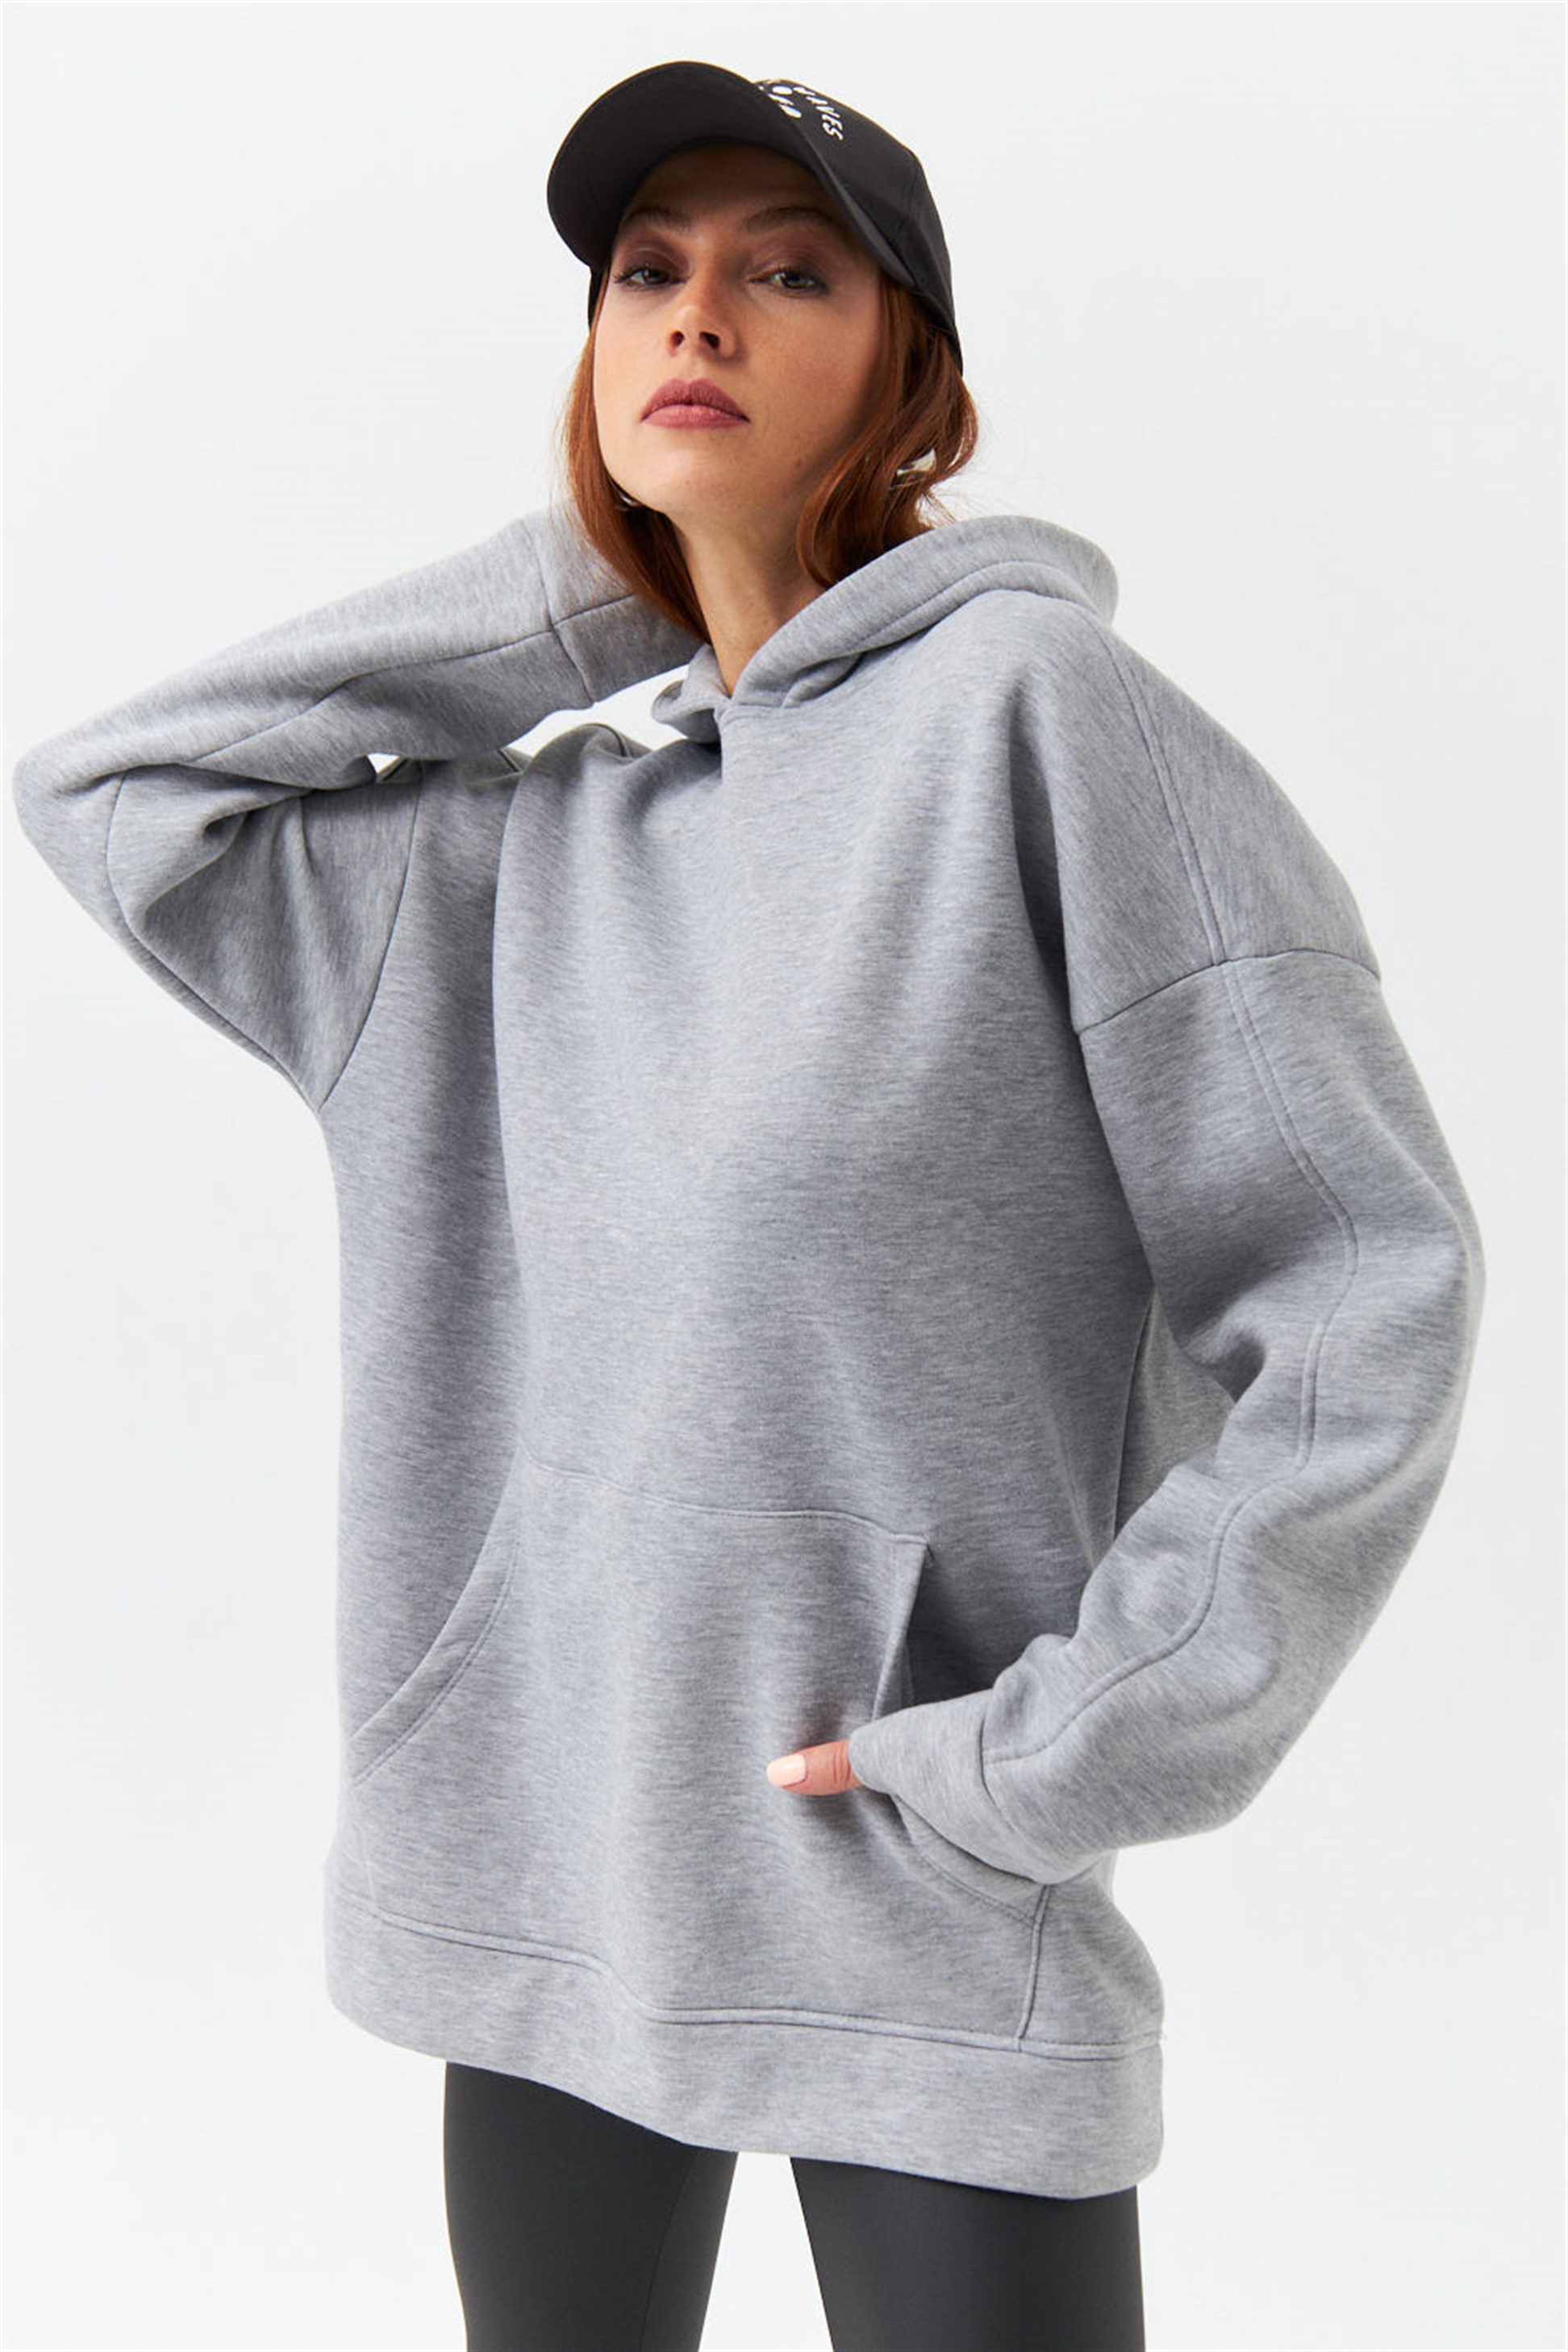 DAMEN Pullovers & Sweatshirts Oversize Zara Pullover Grau S Rabatt 78 % 